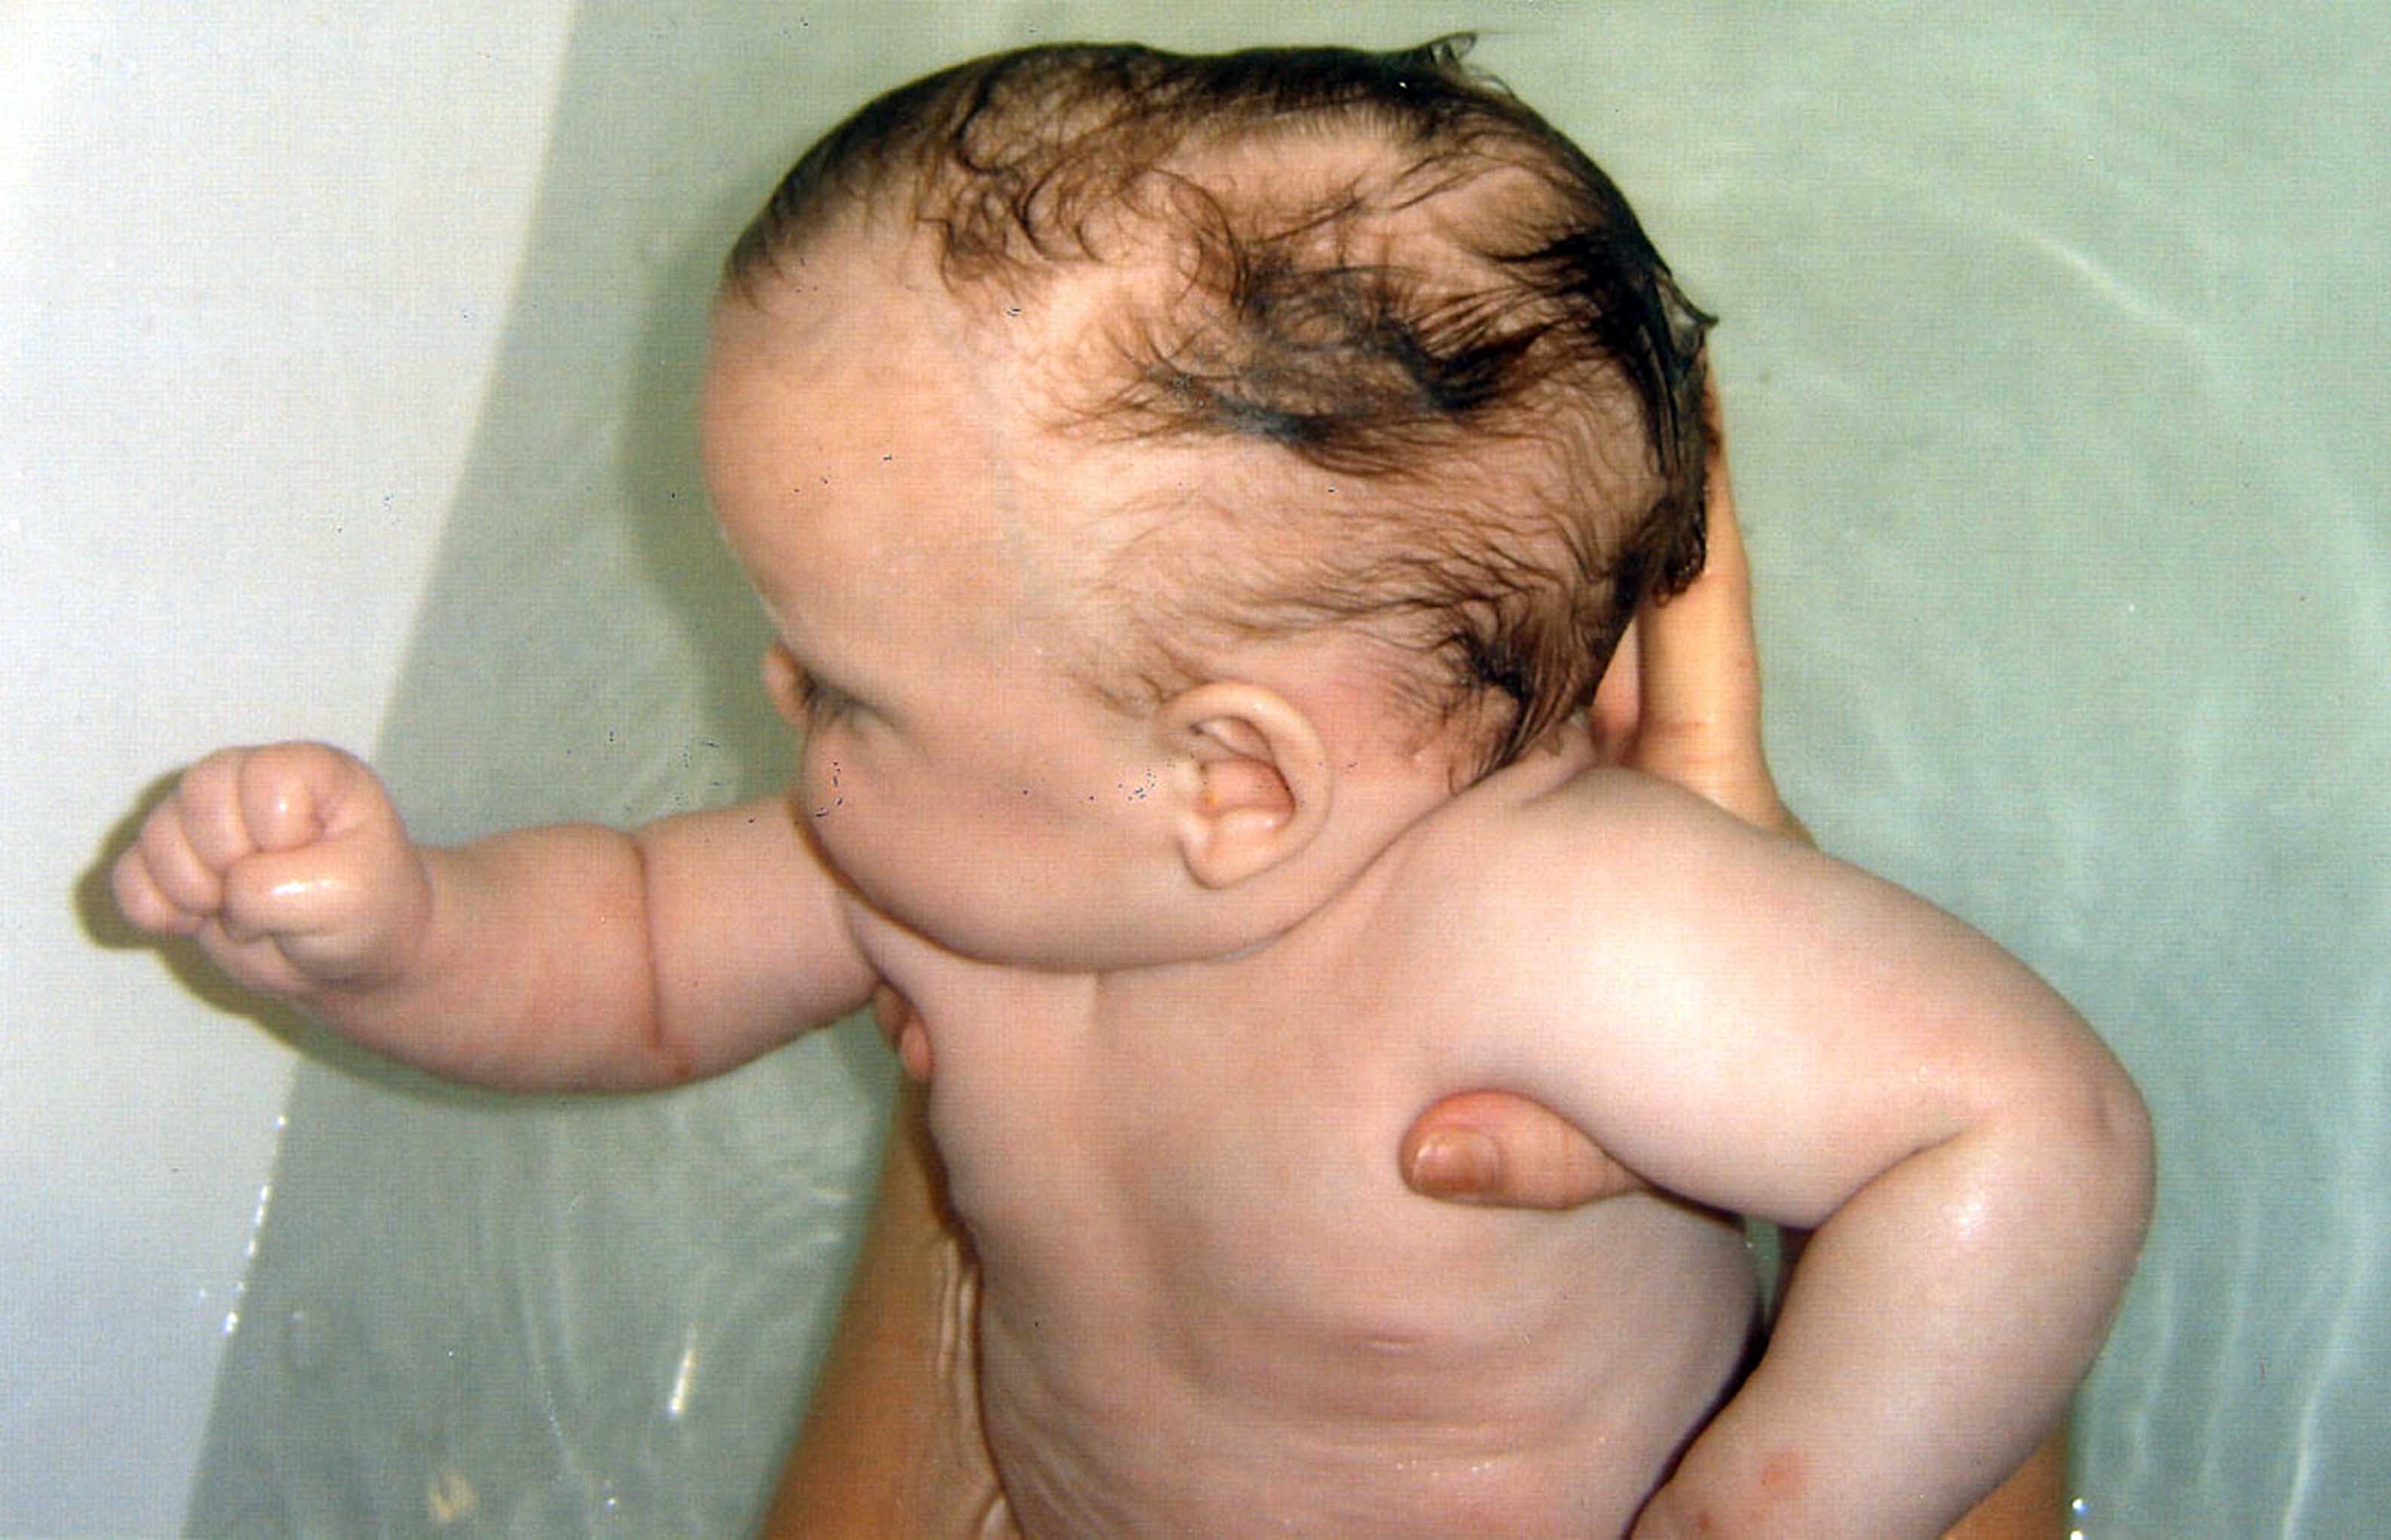 Brave baby born with irregular shaped head